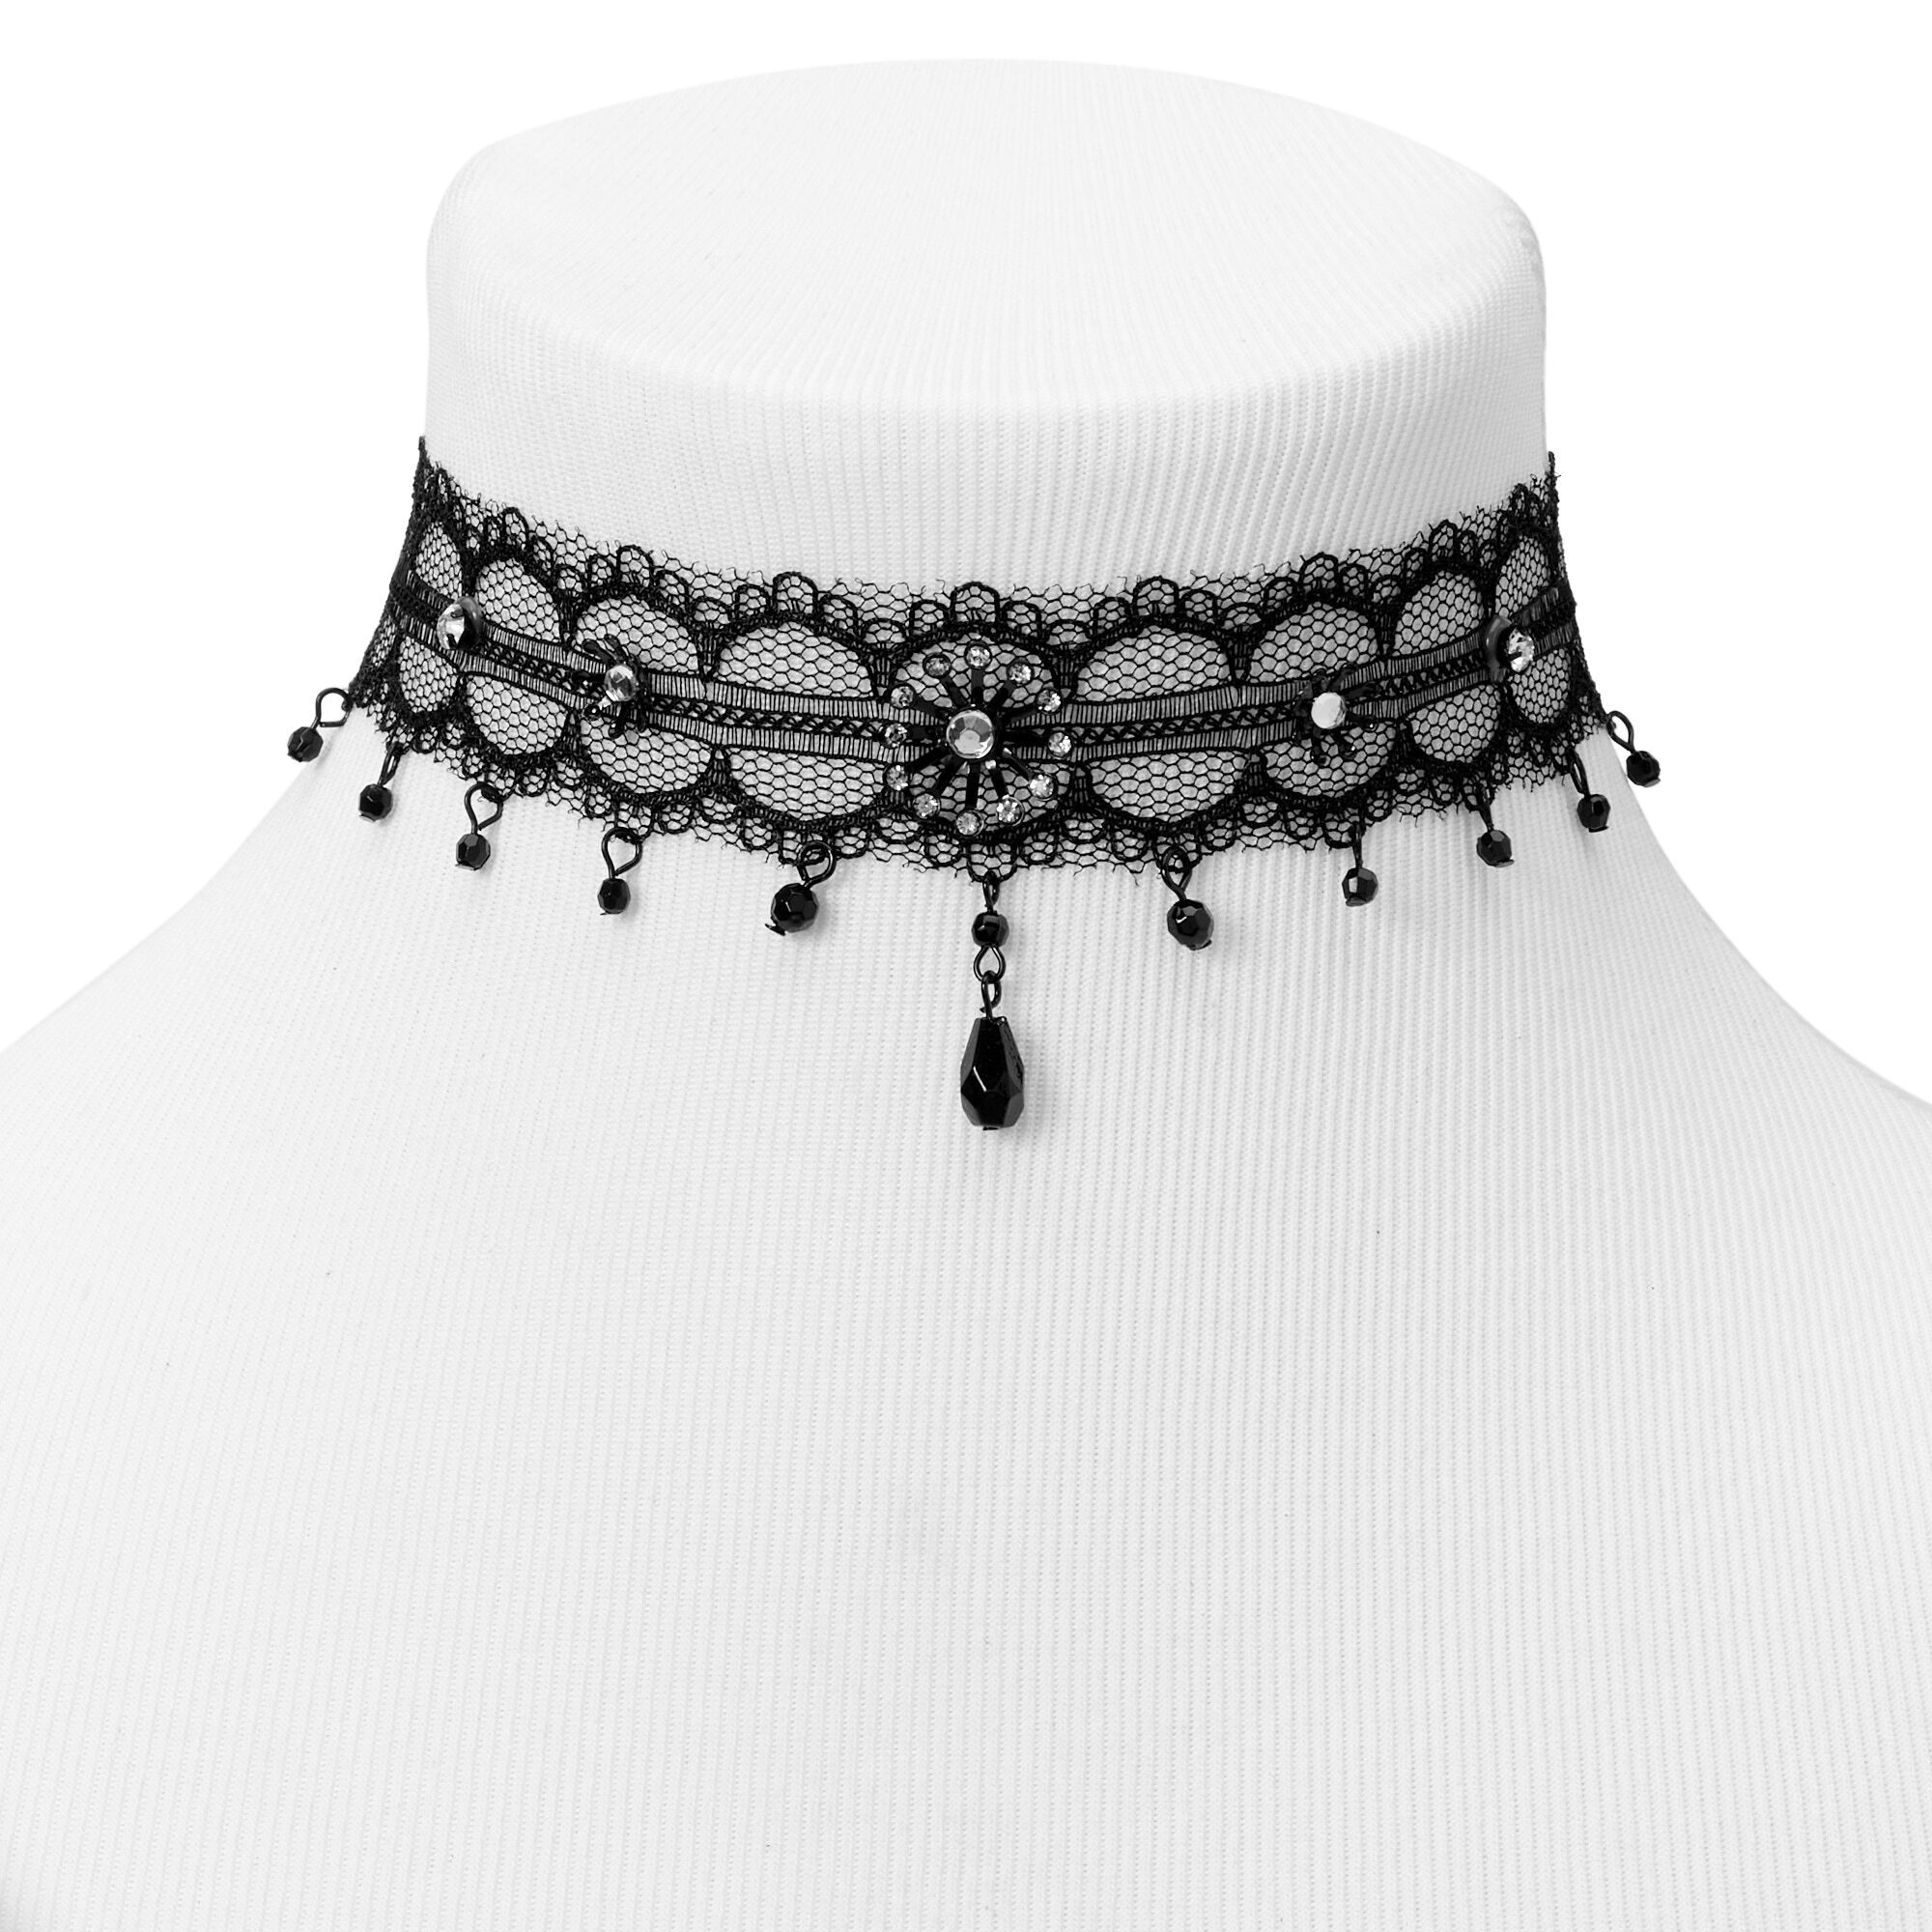 Starburst Beaded Lace Black Choker Necklace